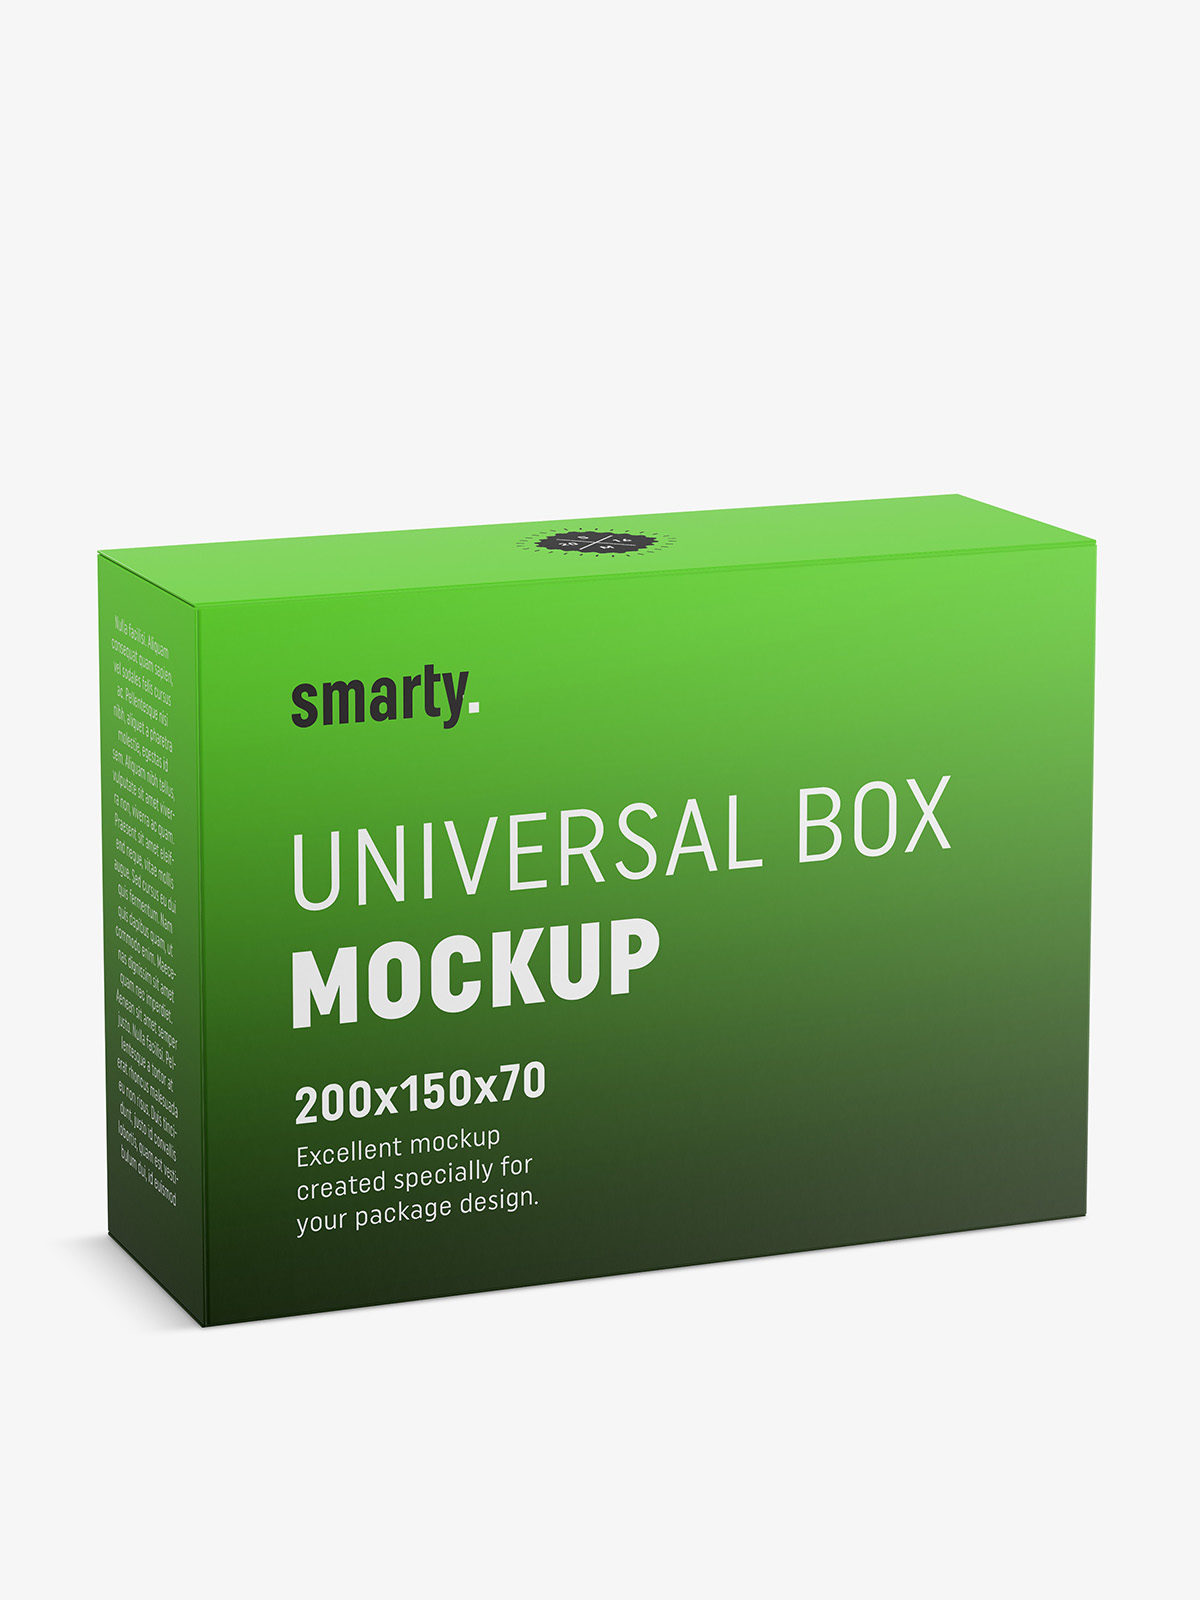 Download Cardboard box mockup / 200x150x70 - Smarty Mockups